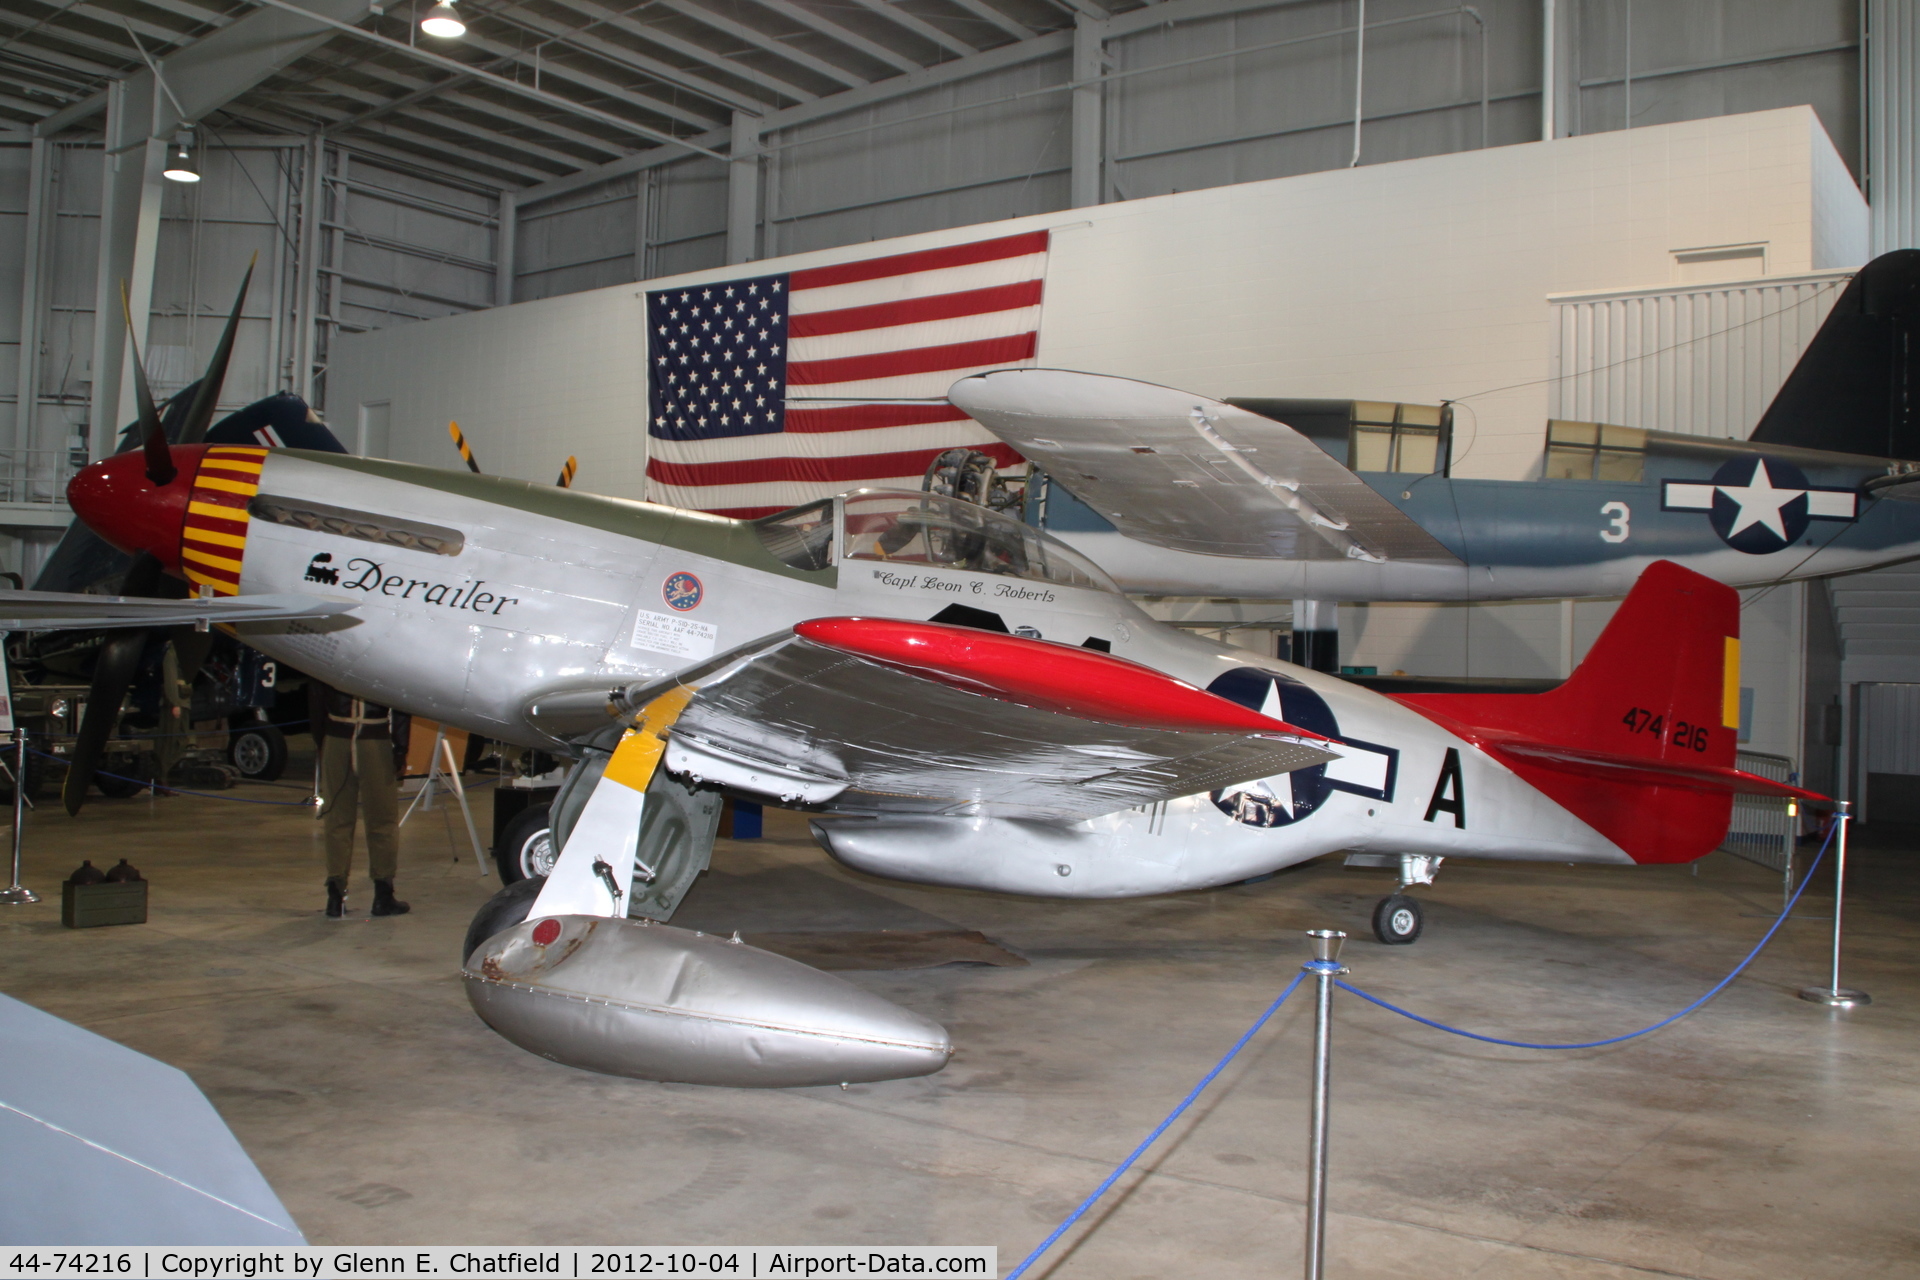 44-74216, 1944 North American P-51D-25-NA Mustang C/N 122-40756, Battleship Alabama Museum